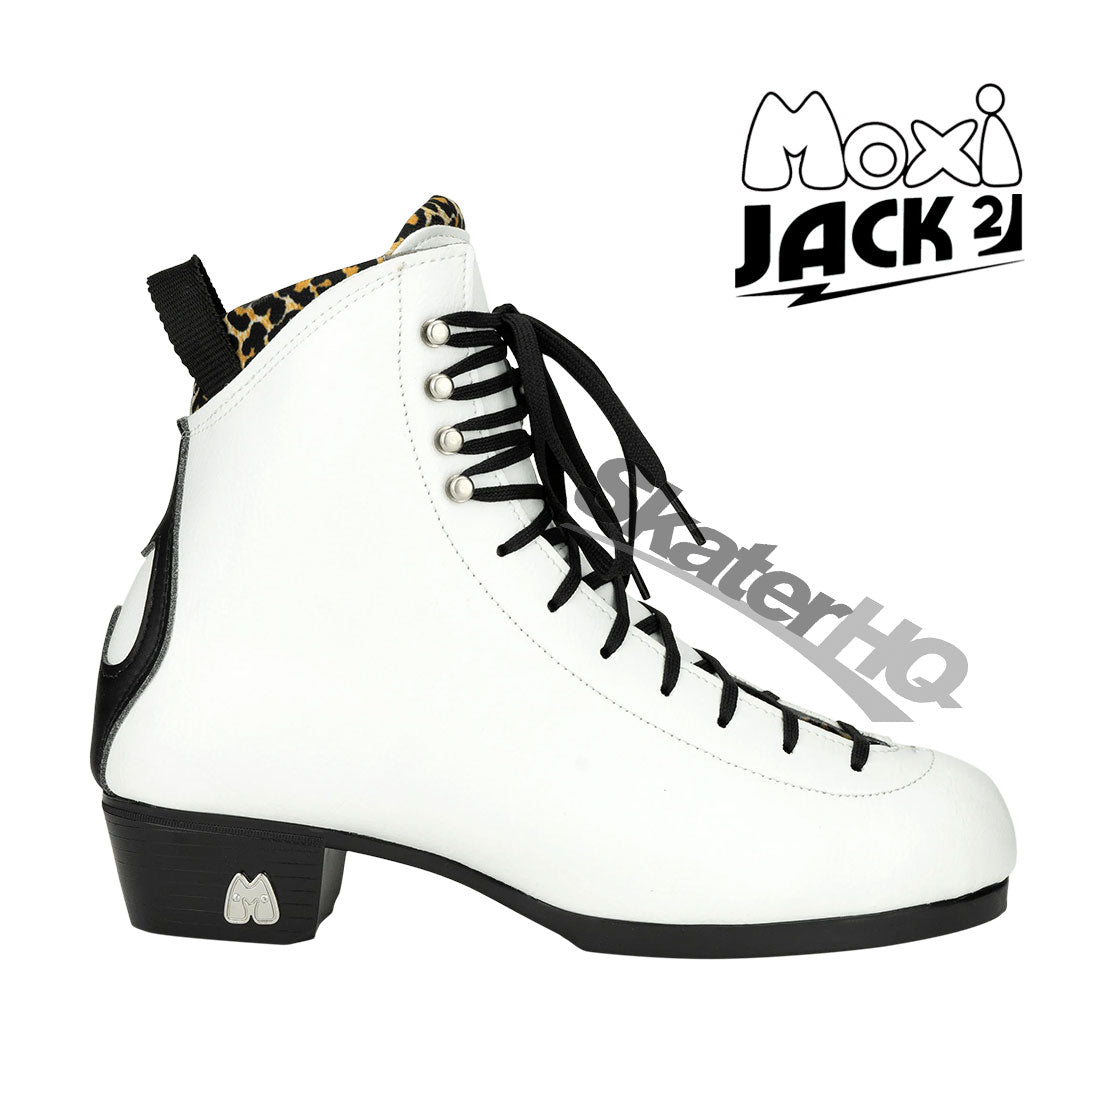 Moxi Jack 2 Boot - Vegan White Roller Skate Boots